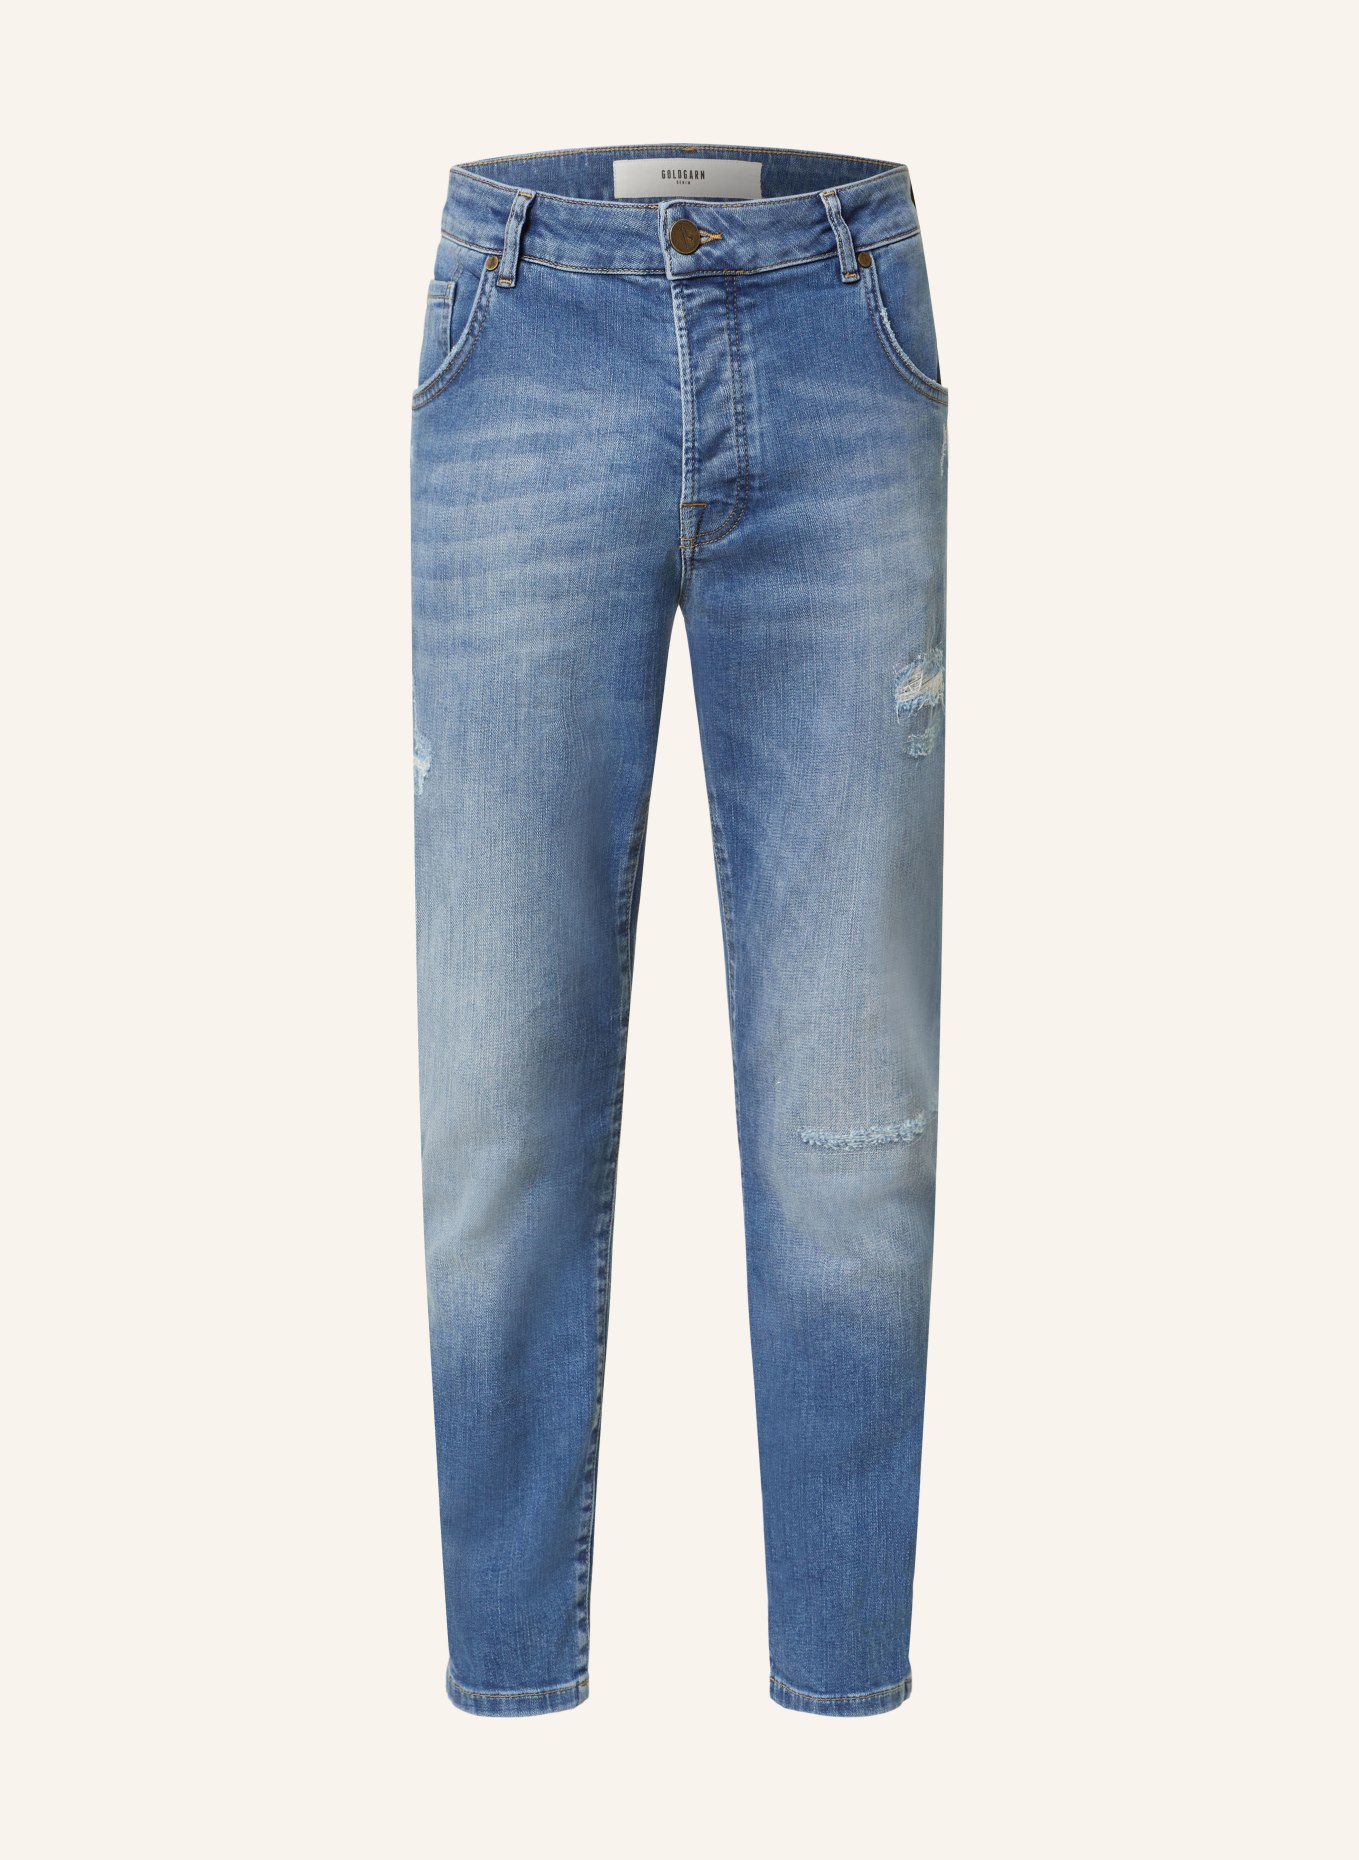 GOLDGARN DENIM Jeans NECKARAU Twisted Fit, Farbe: 1070 LIGHTBLUE (Bild 1)